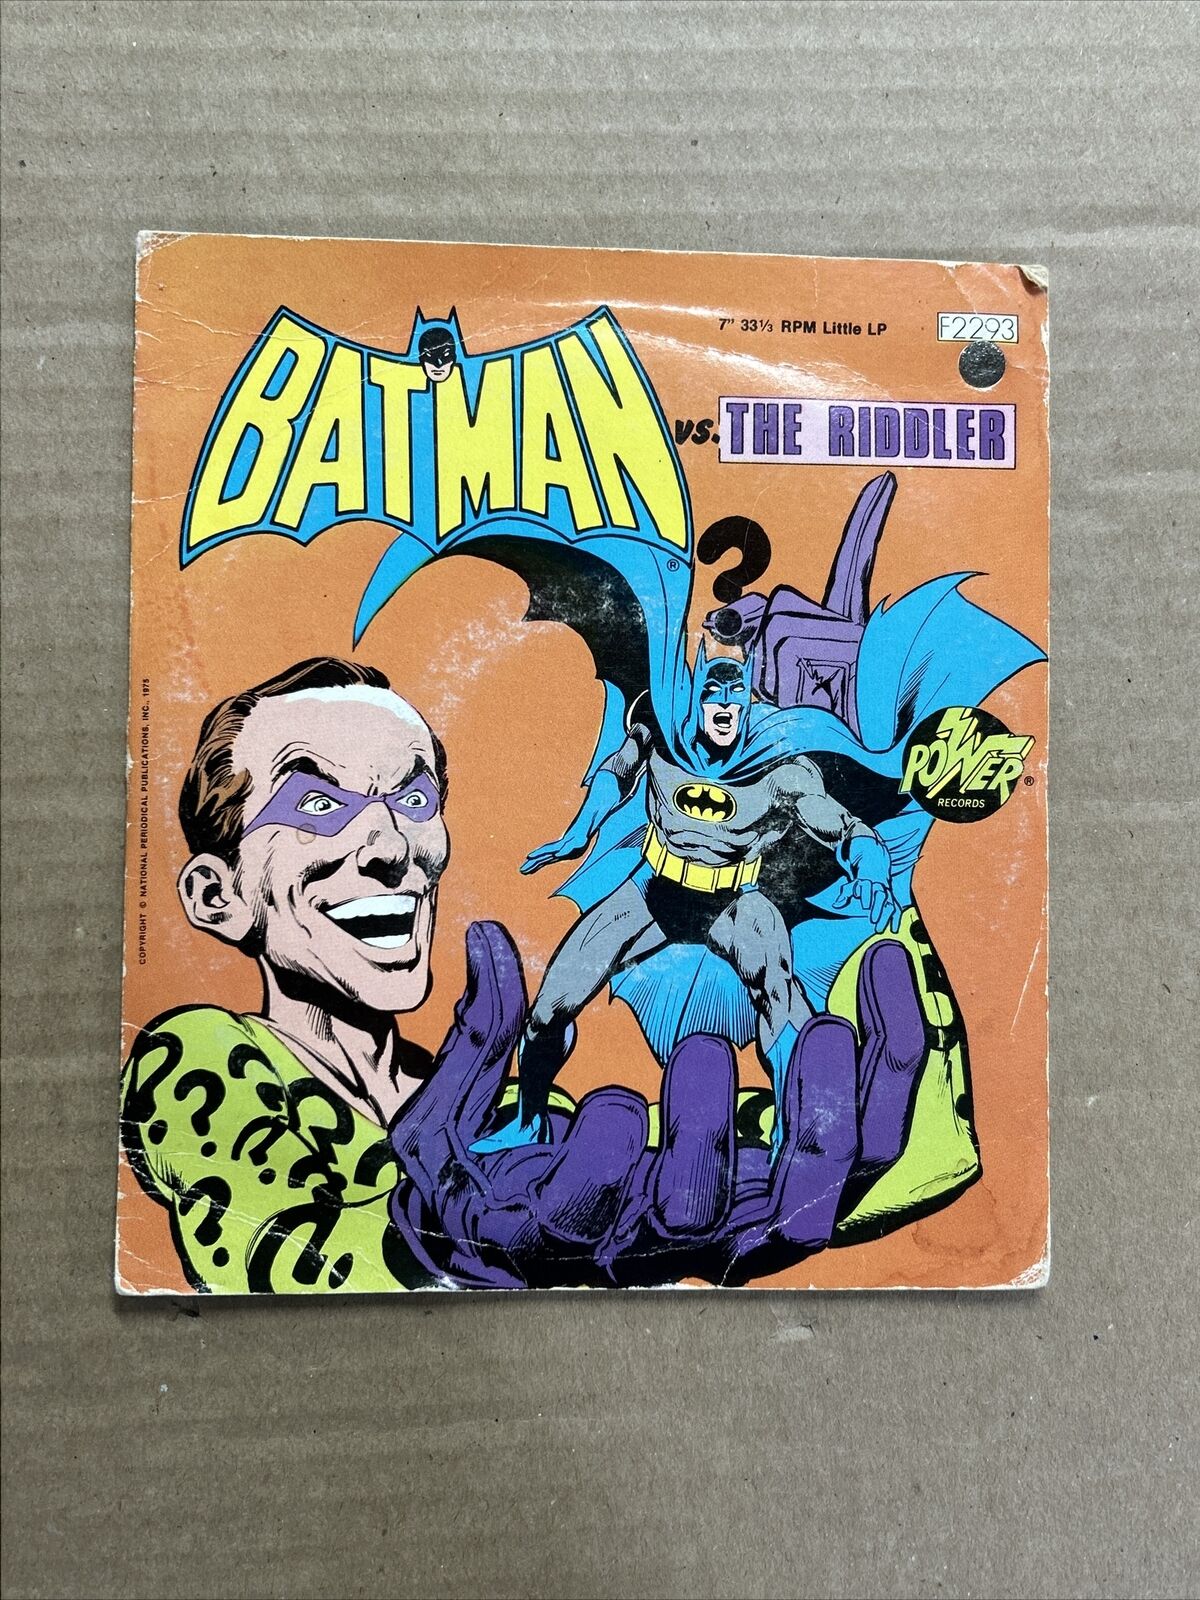 Batman Vs The Riddler Power Records  7” 33 1/3 RPM Little LP Vinyl Record - 1975